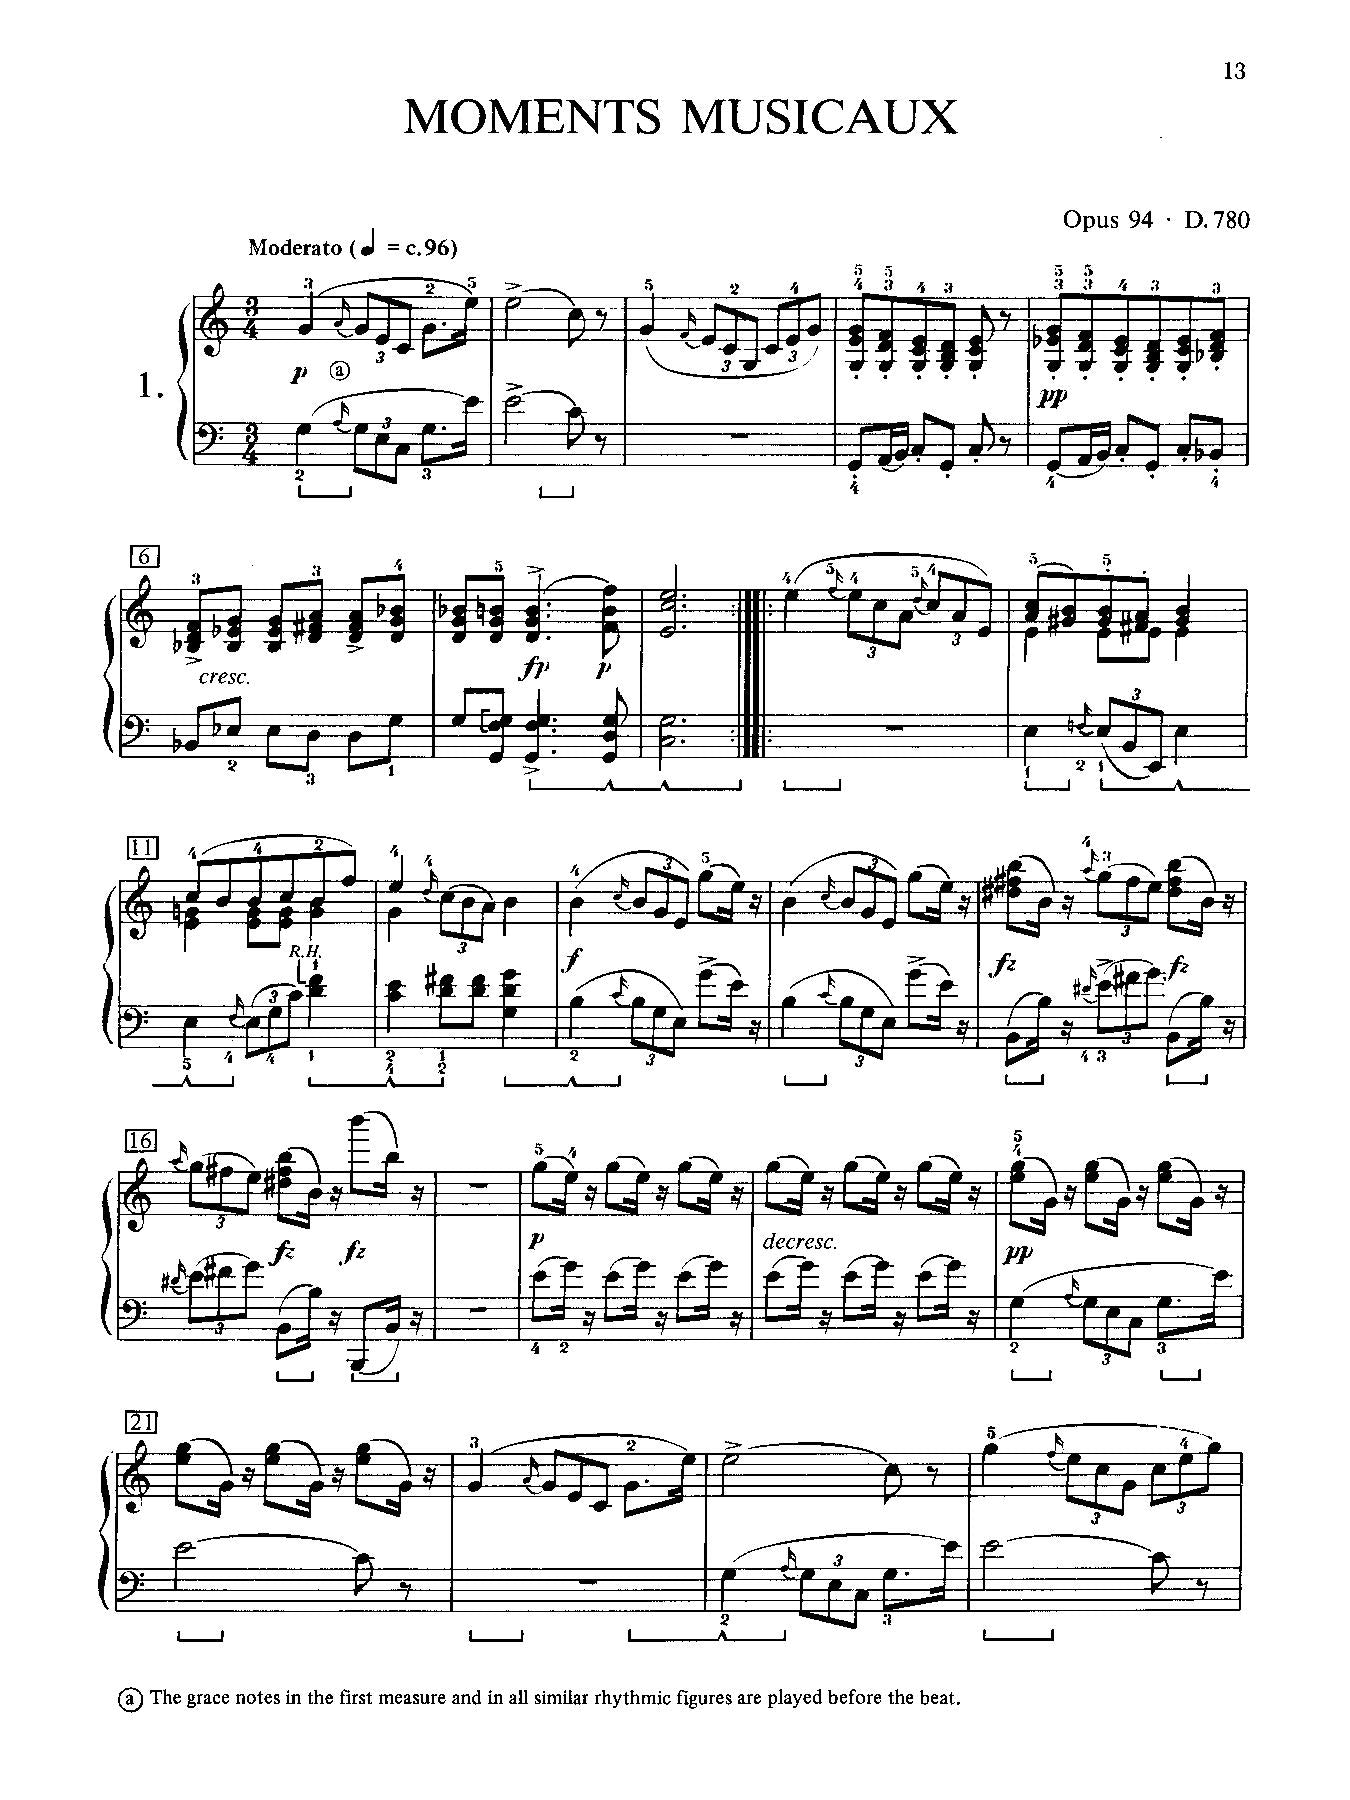 Schubert: Moments musicaux, Opus 94 and Impromptus, Opp. 90 & 142